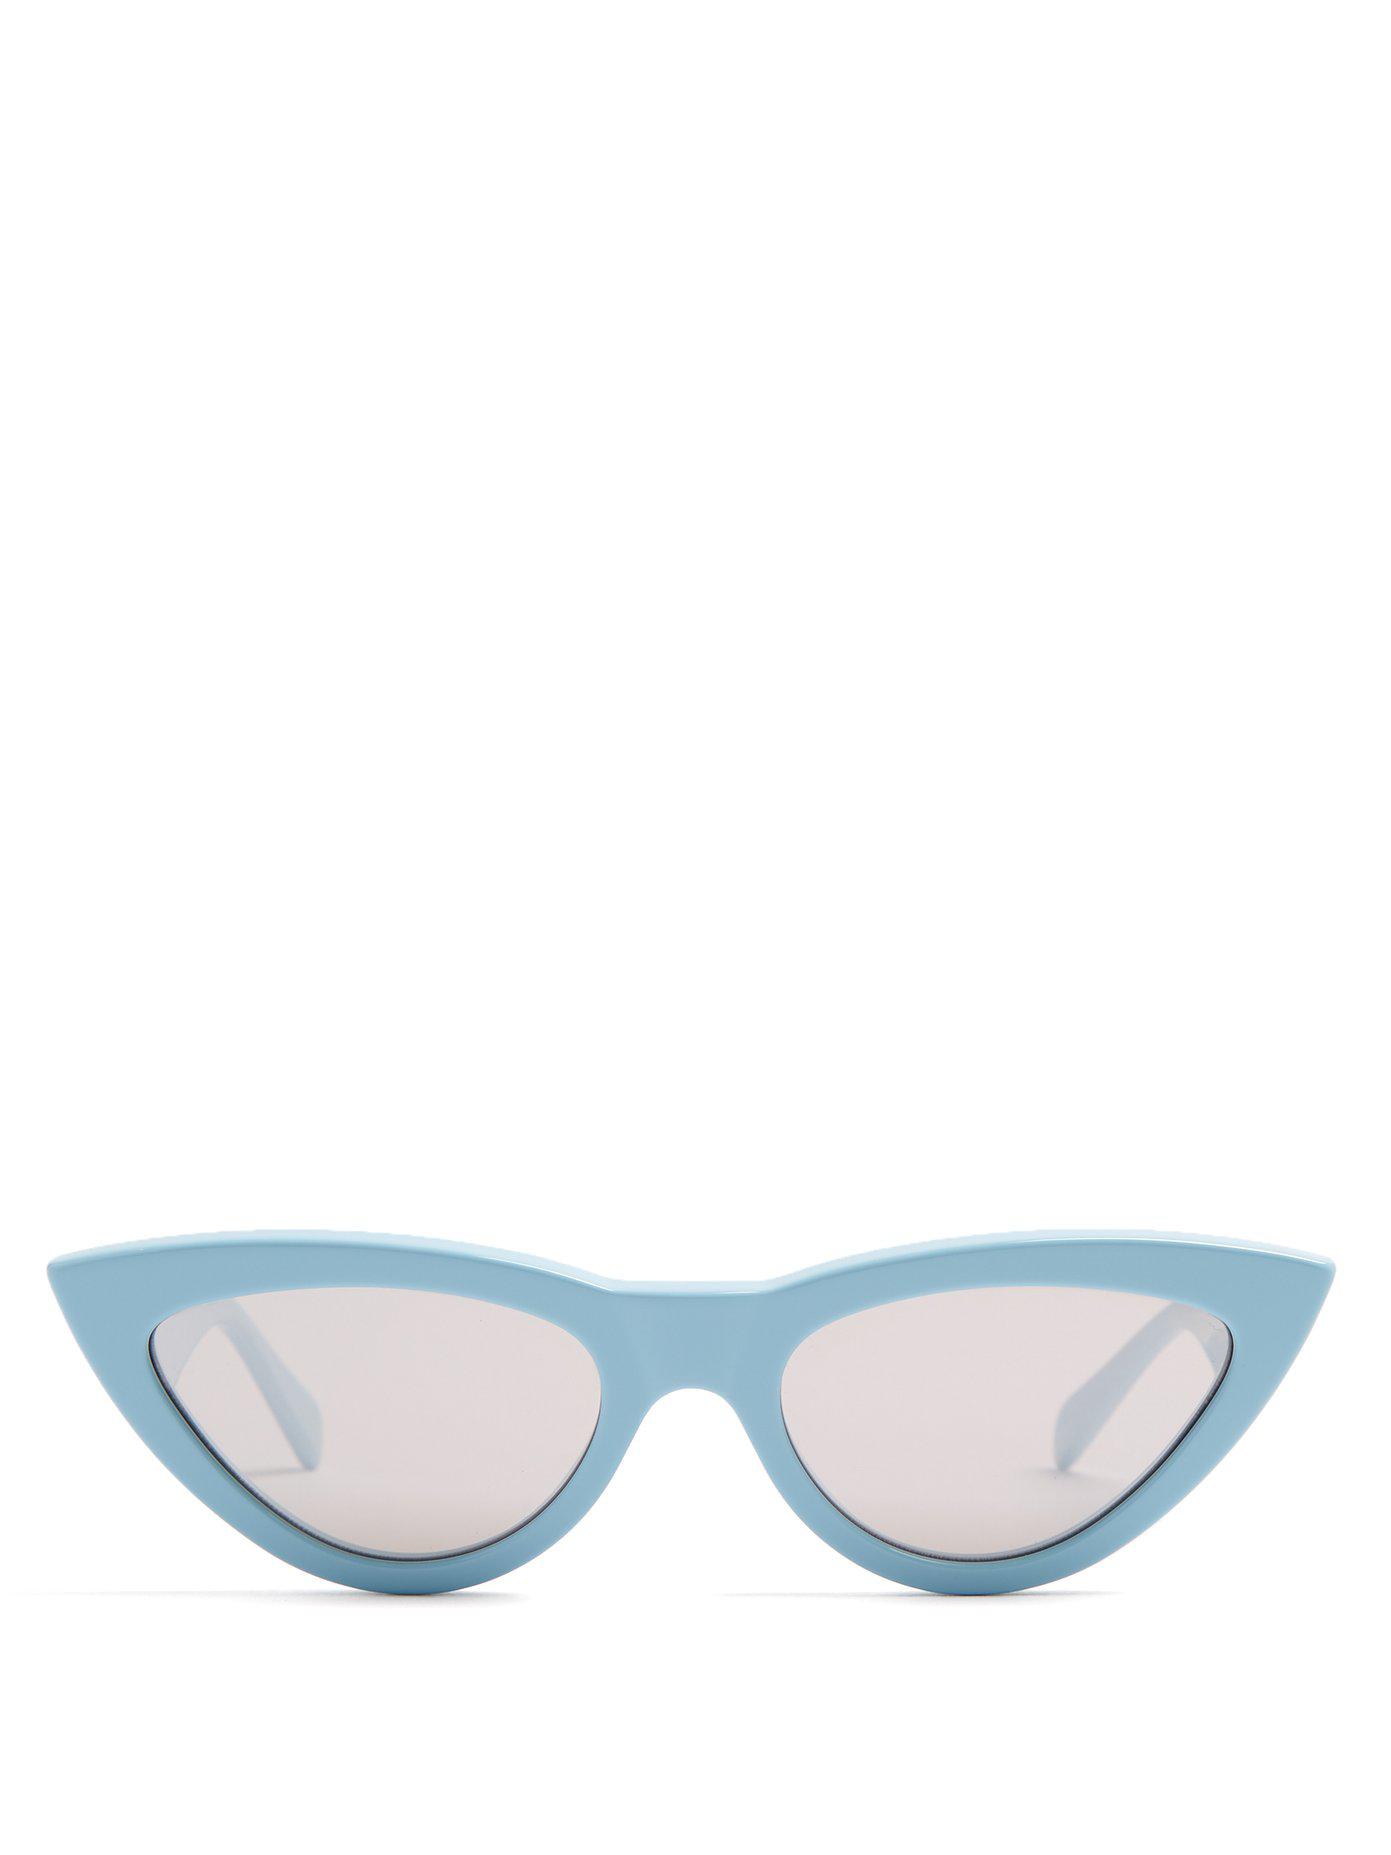 Celine Cat-eye Acetate Sunglasses in Light Blue (Blue) | Lyst